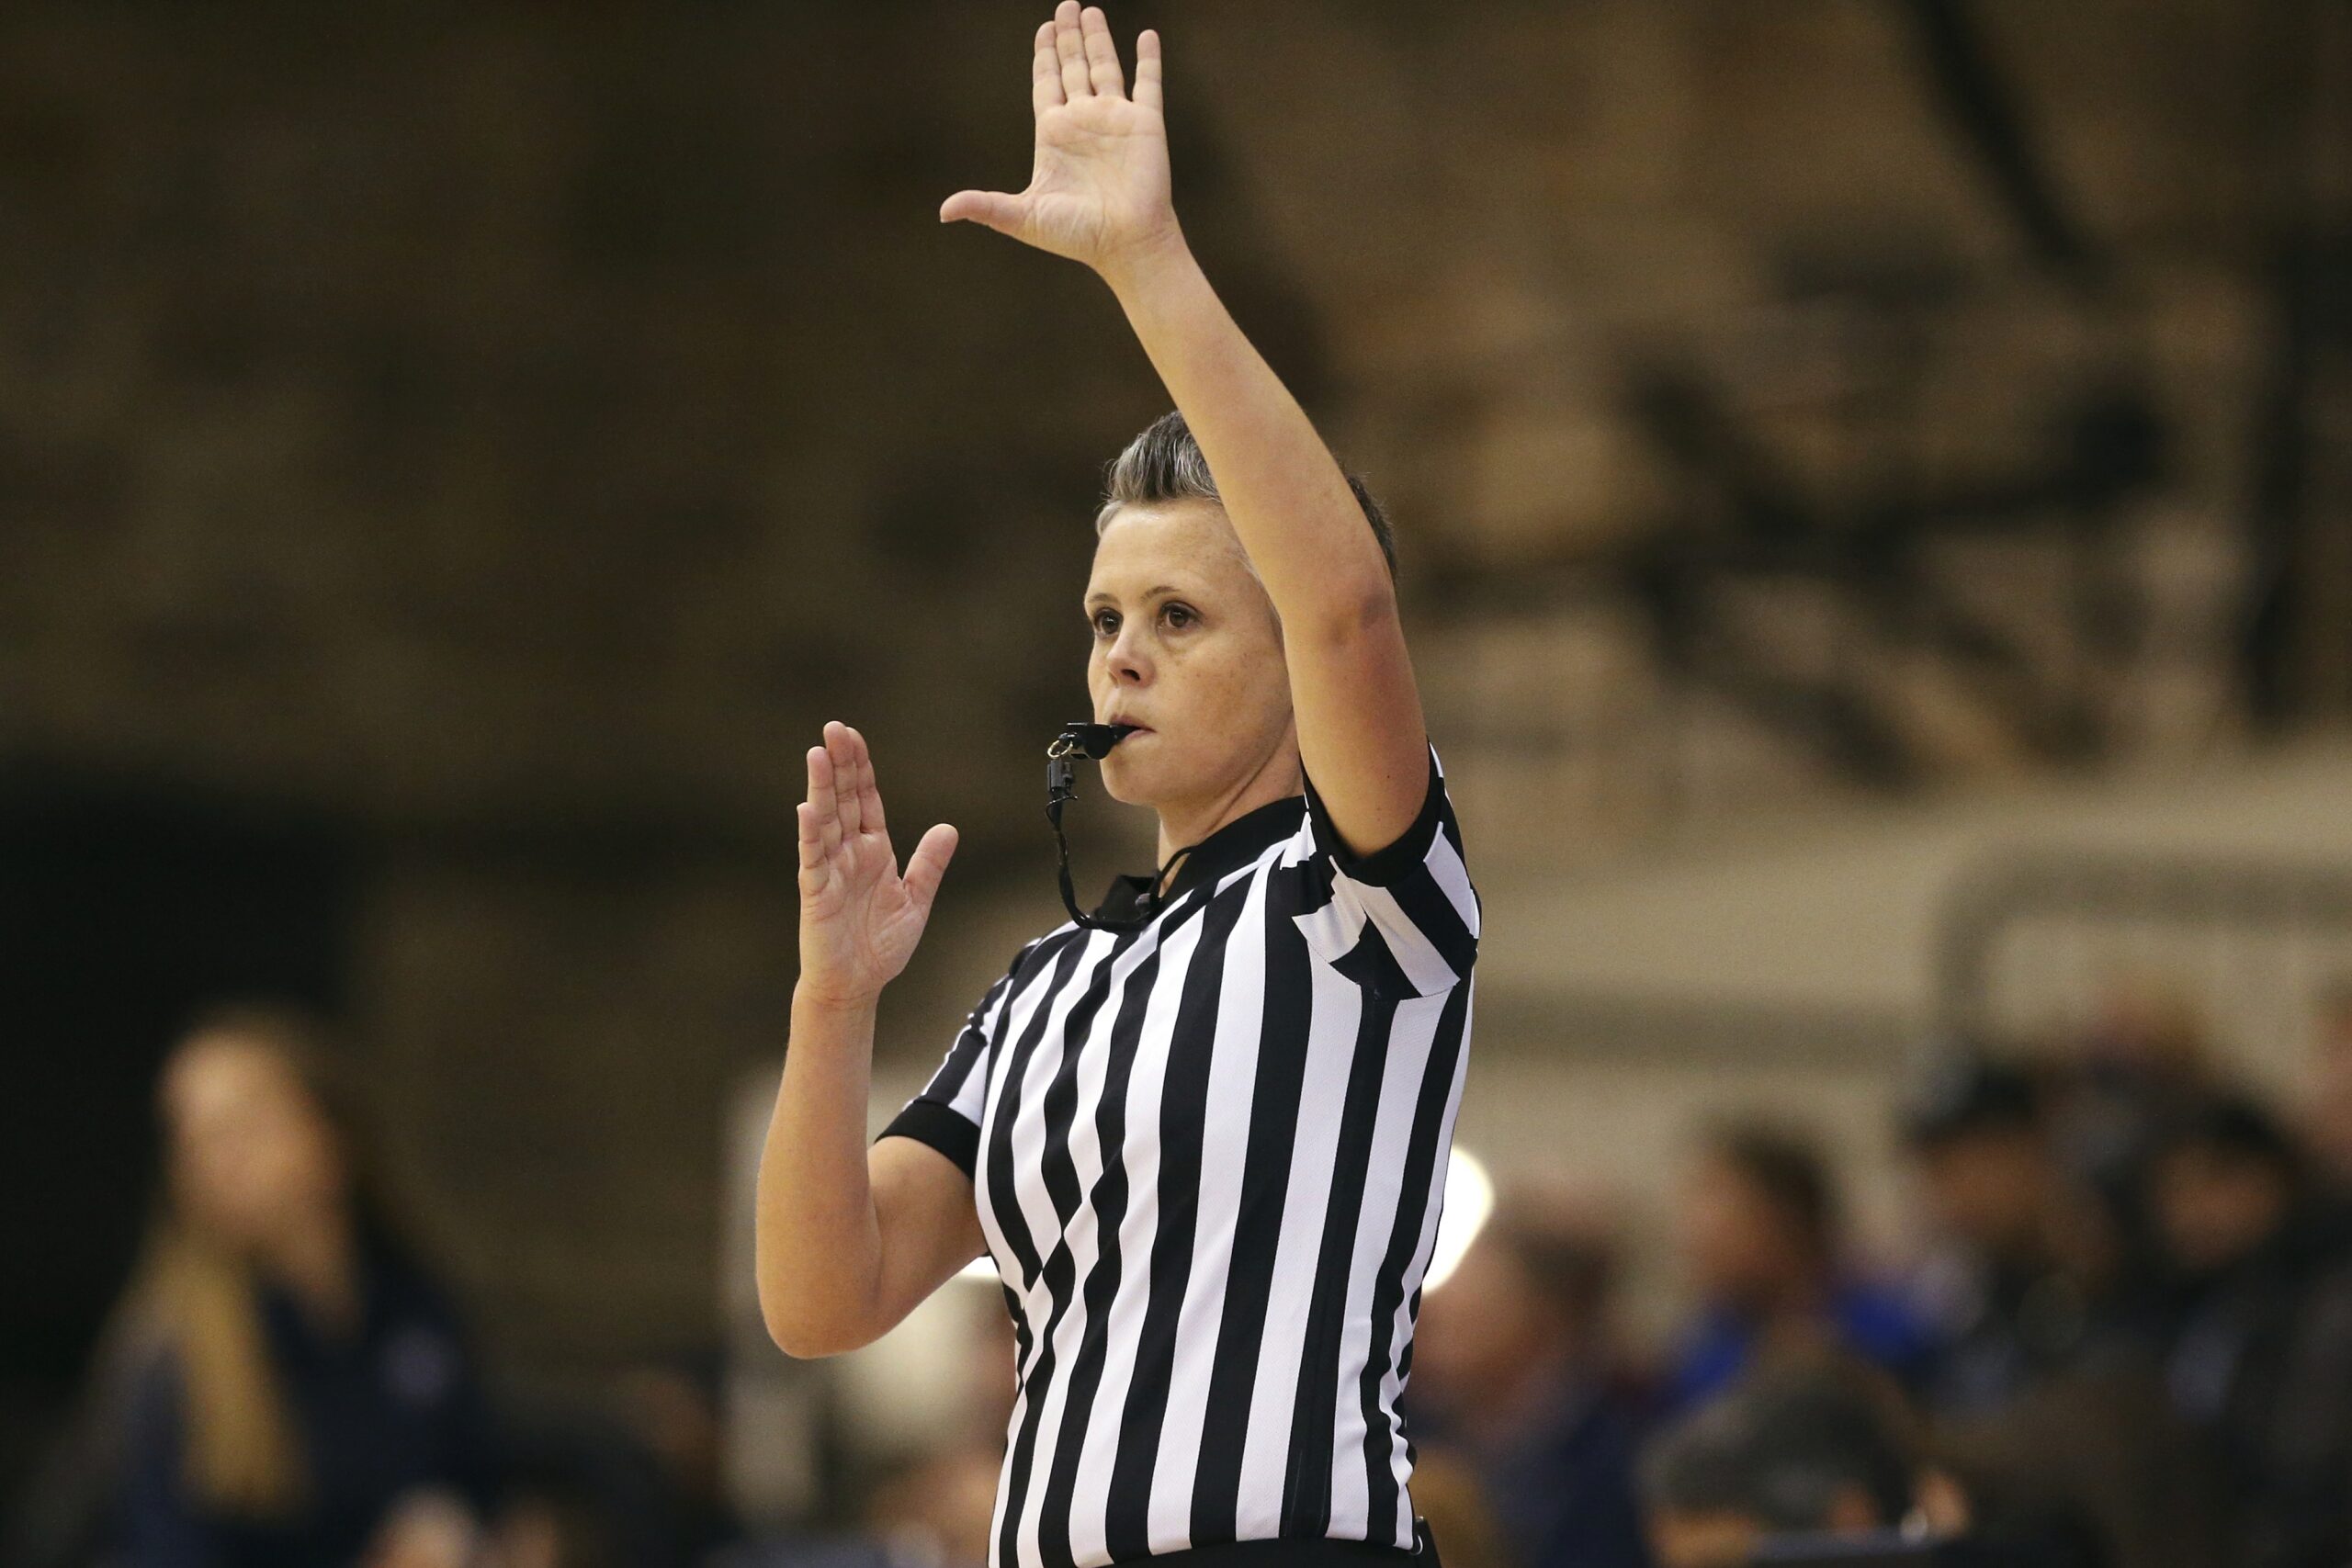 Basketball referee during an NCAA basketball game